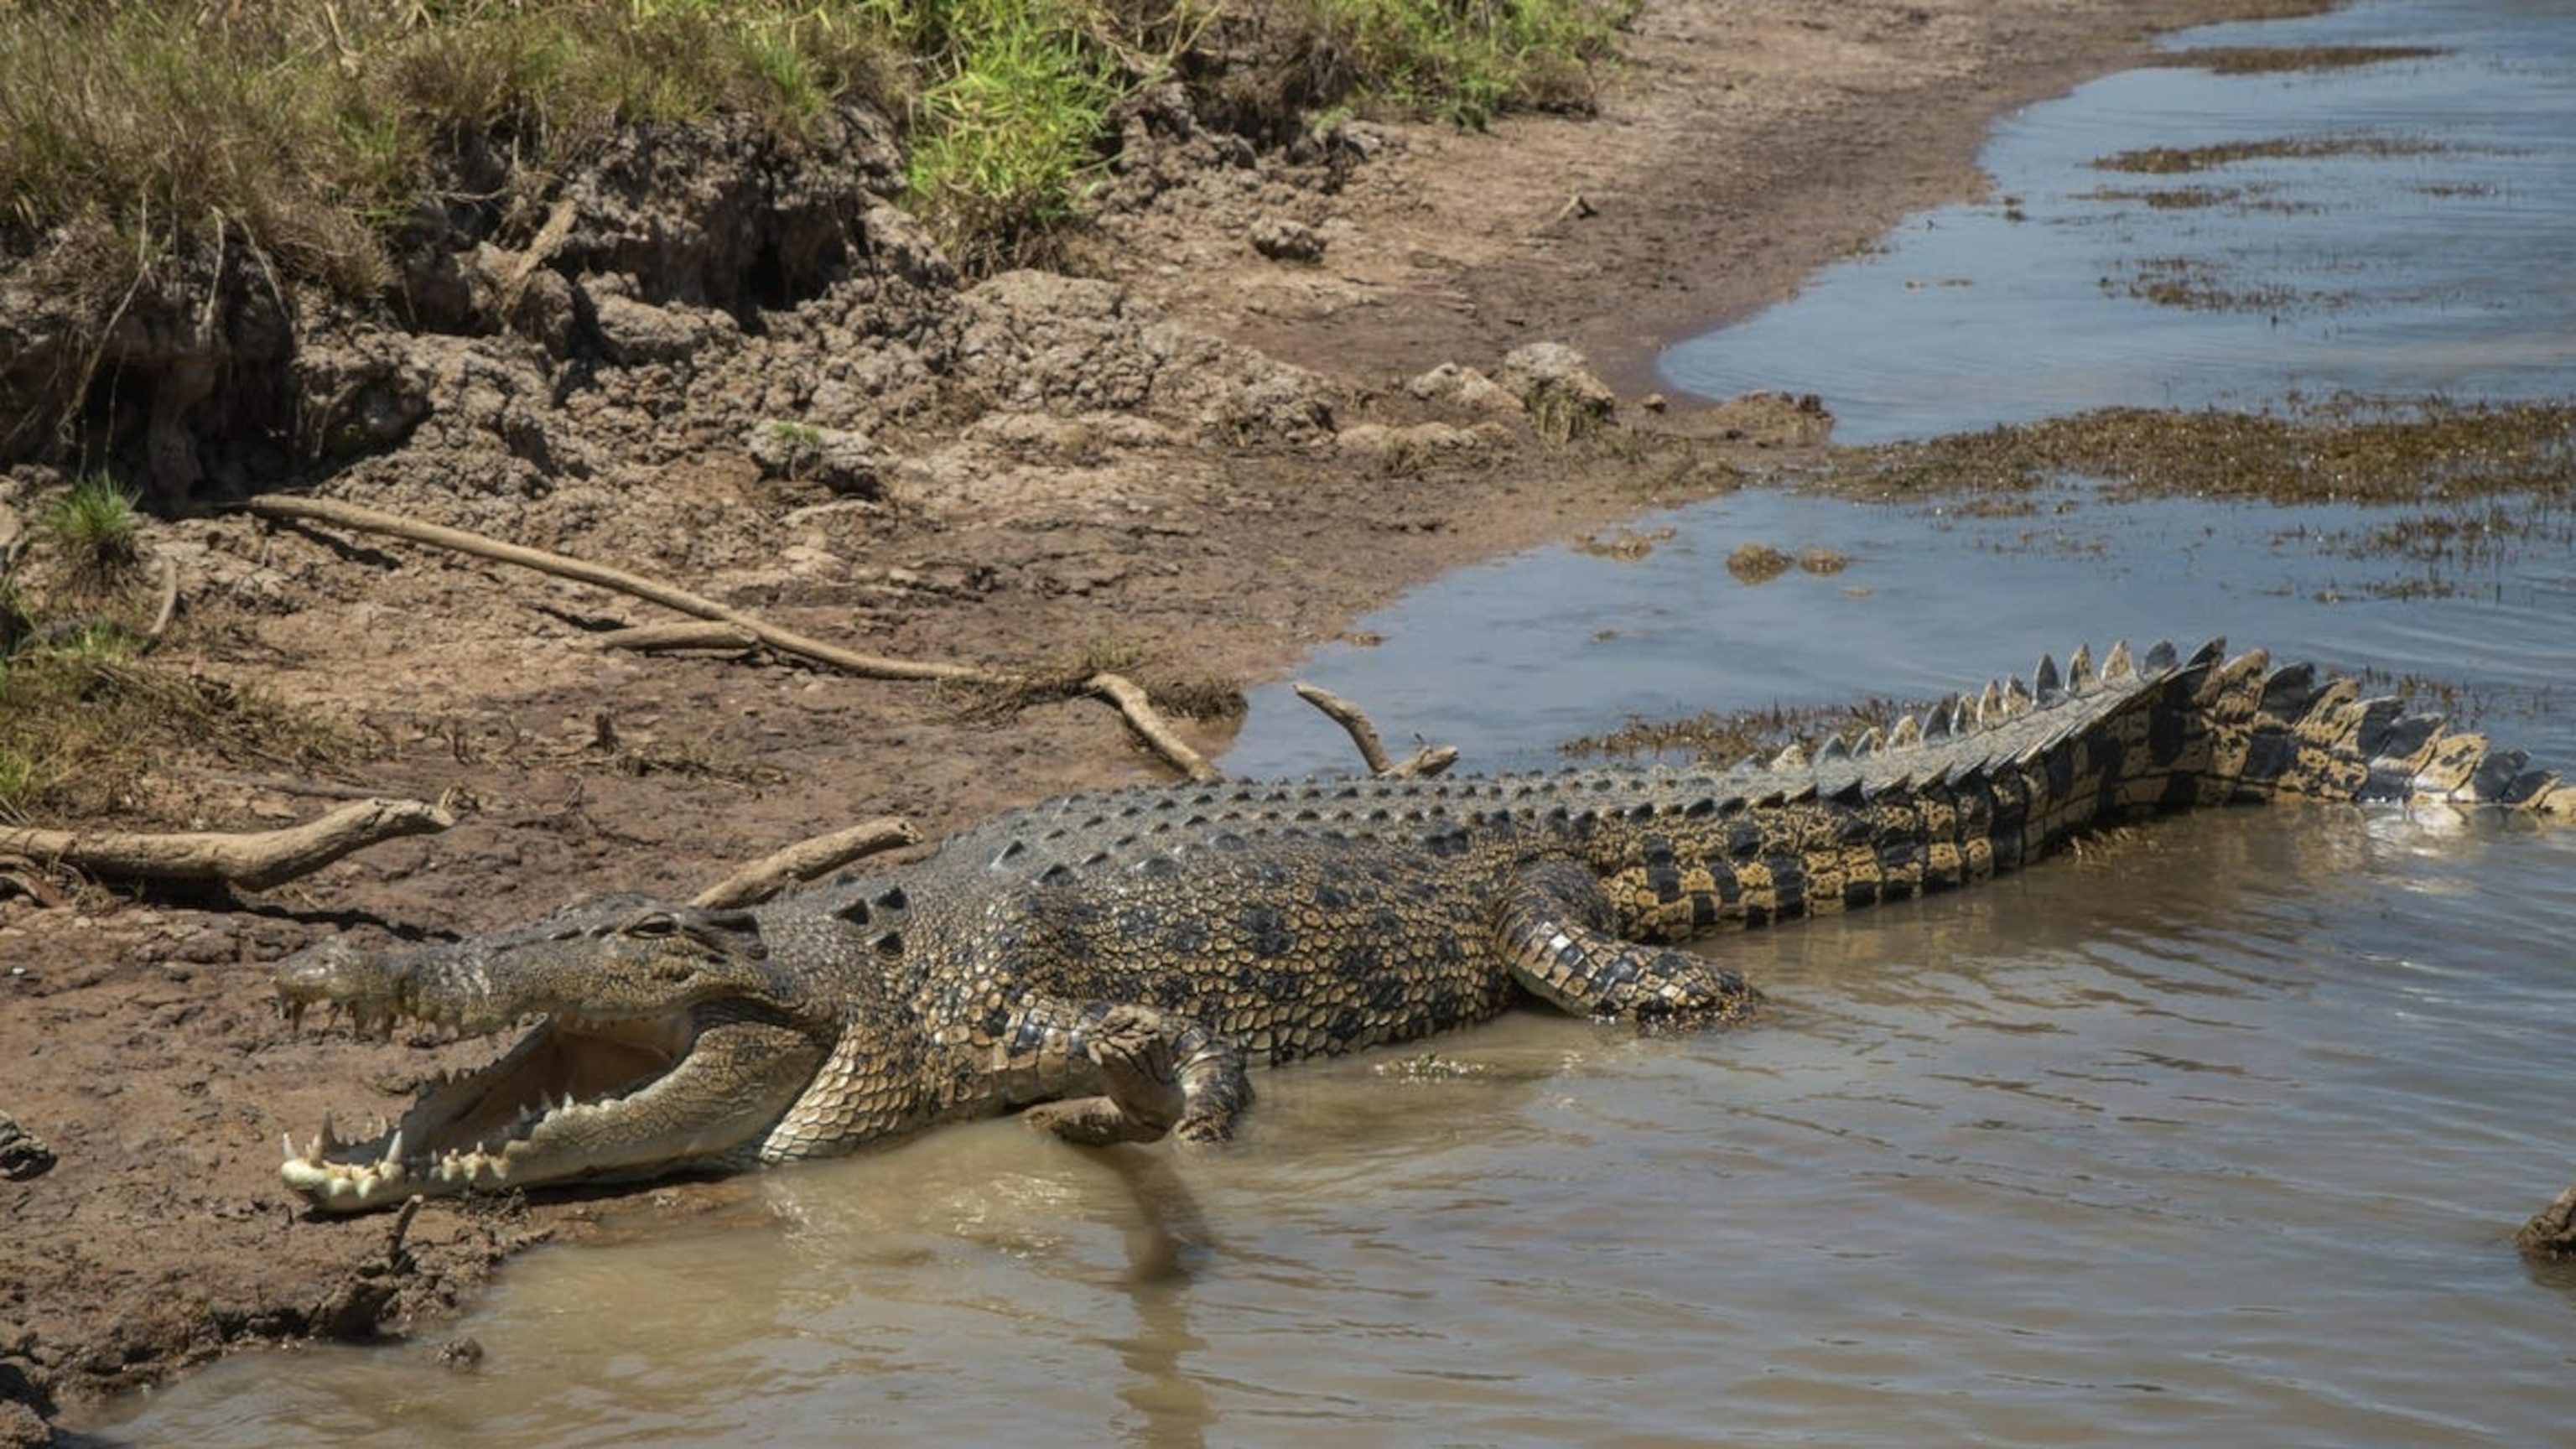 PHOTO: Crocodile resting on the bank of Billabong in Australia.